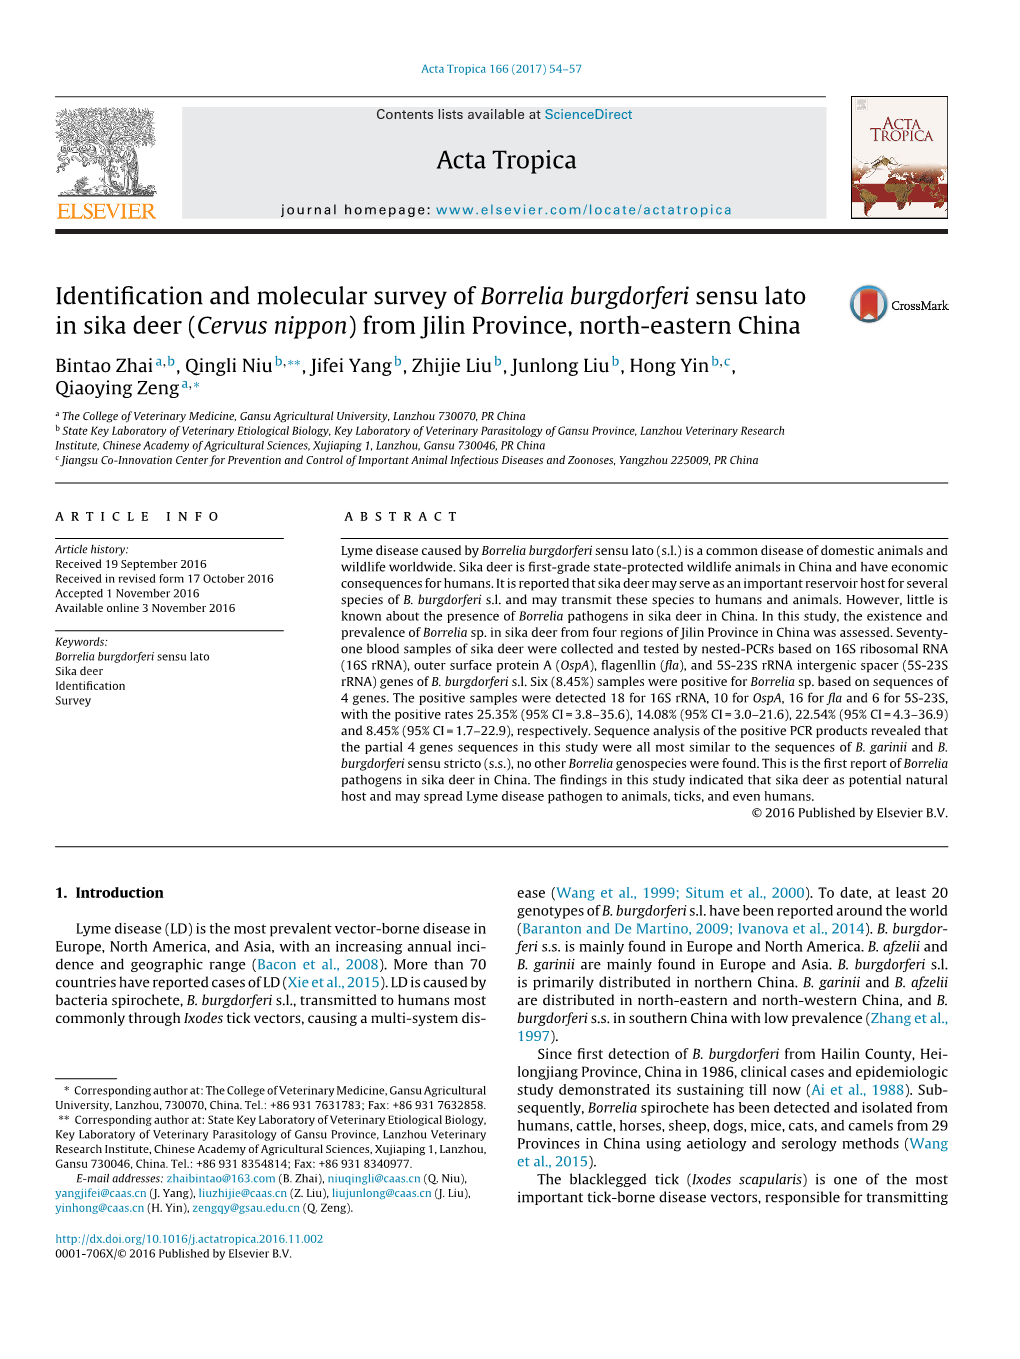 Identification and Molecular Survey of Borrelia